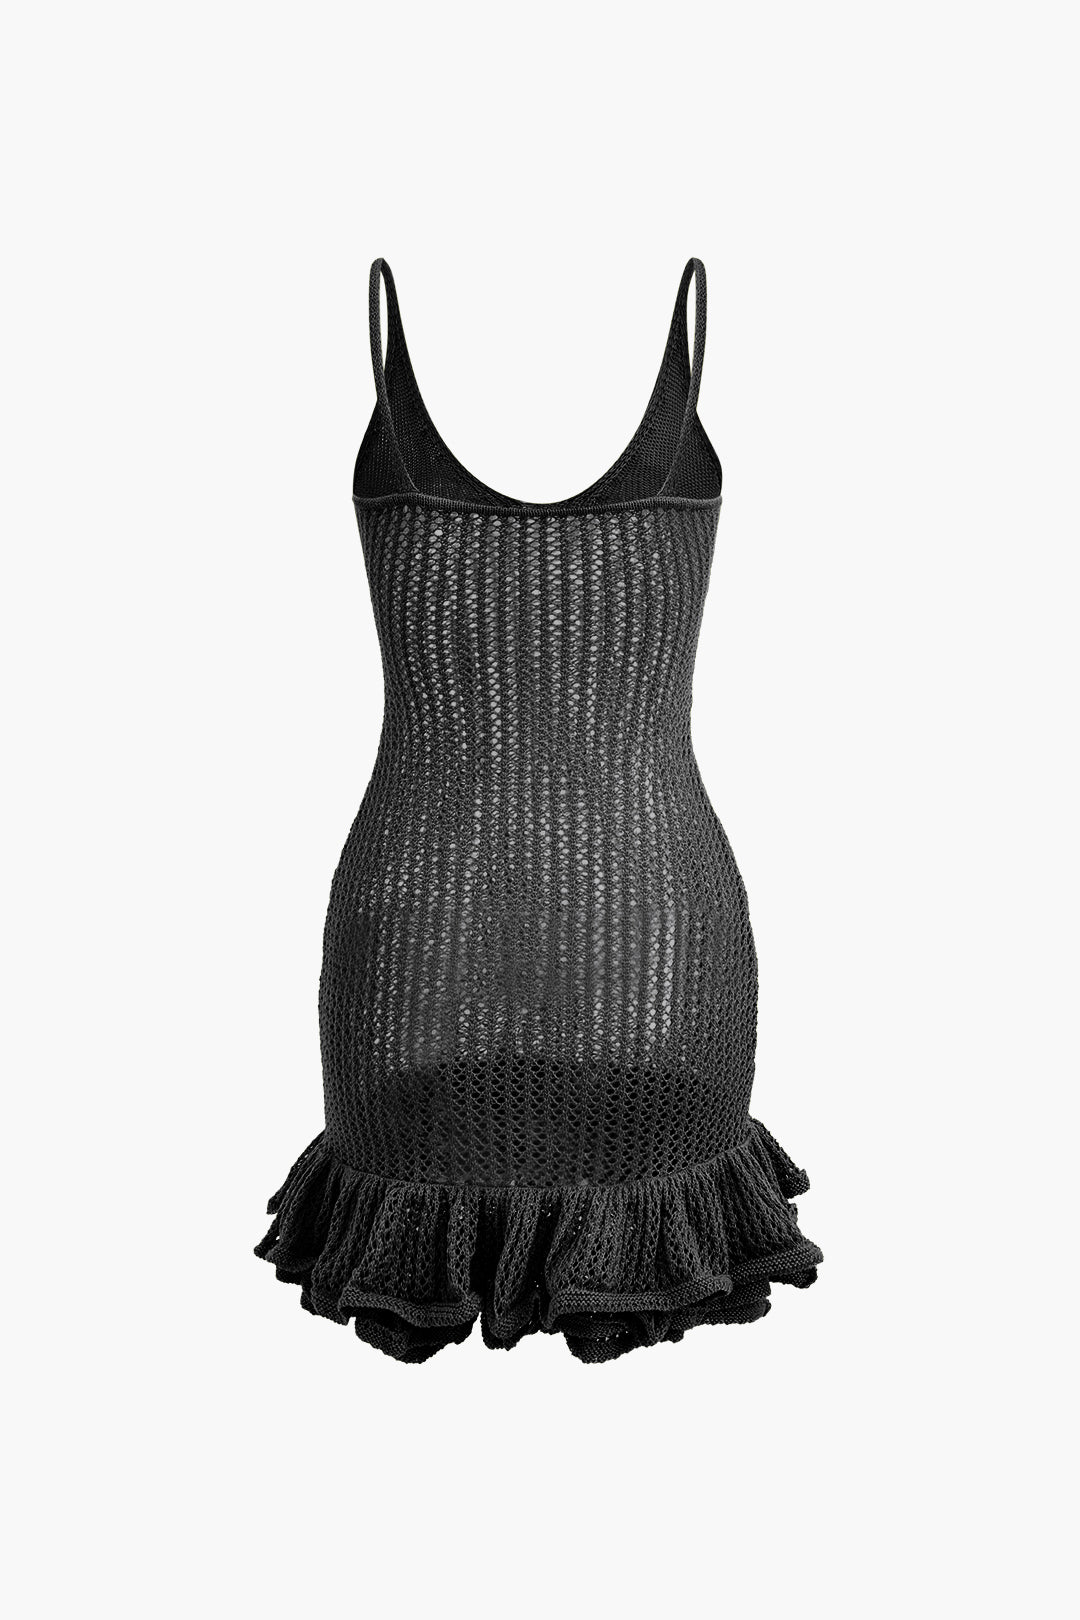 Loft Black Petite Ponte Eyelet Hem Dress Size 2P